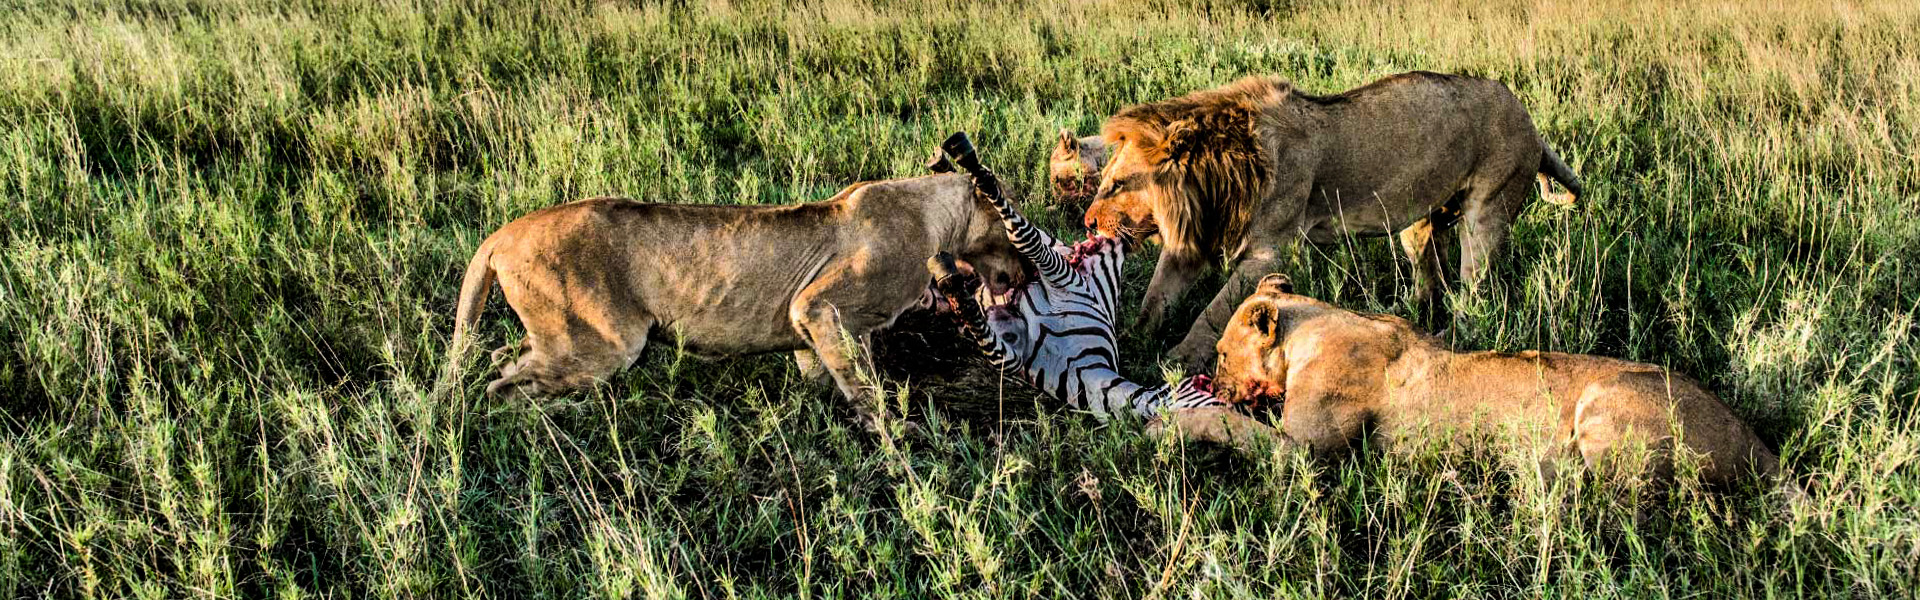 5 Days Group Joining Safari in Tanzania